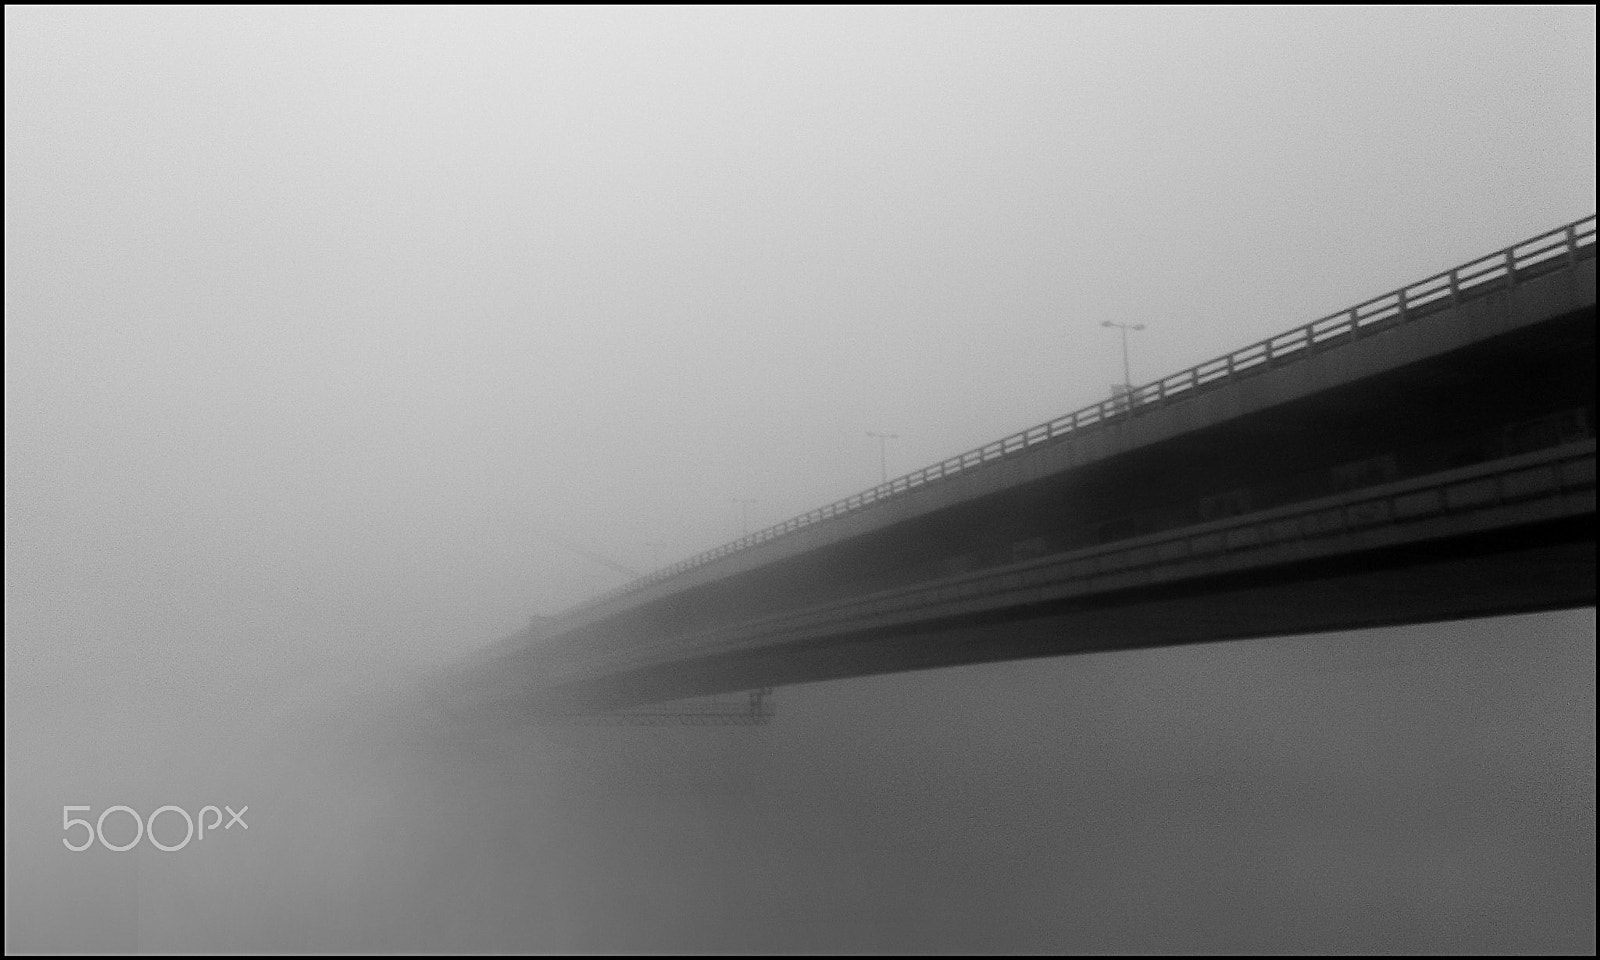 HTC DESIRE 500 sample photo. Bridge to unknown place (snp bridge) photography